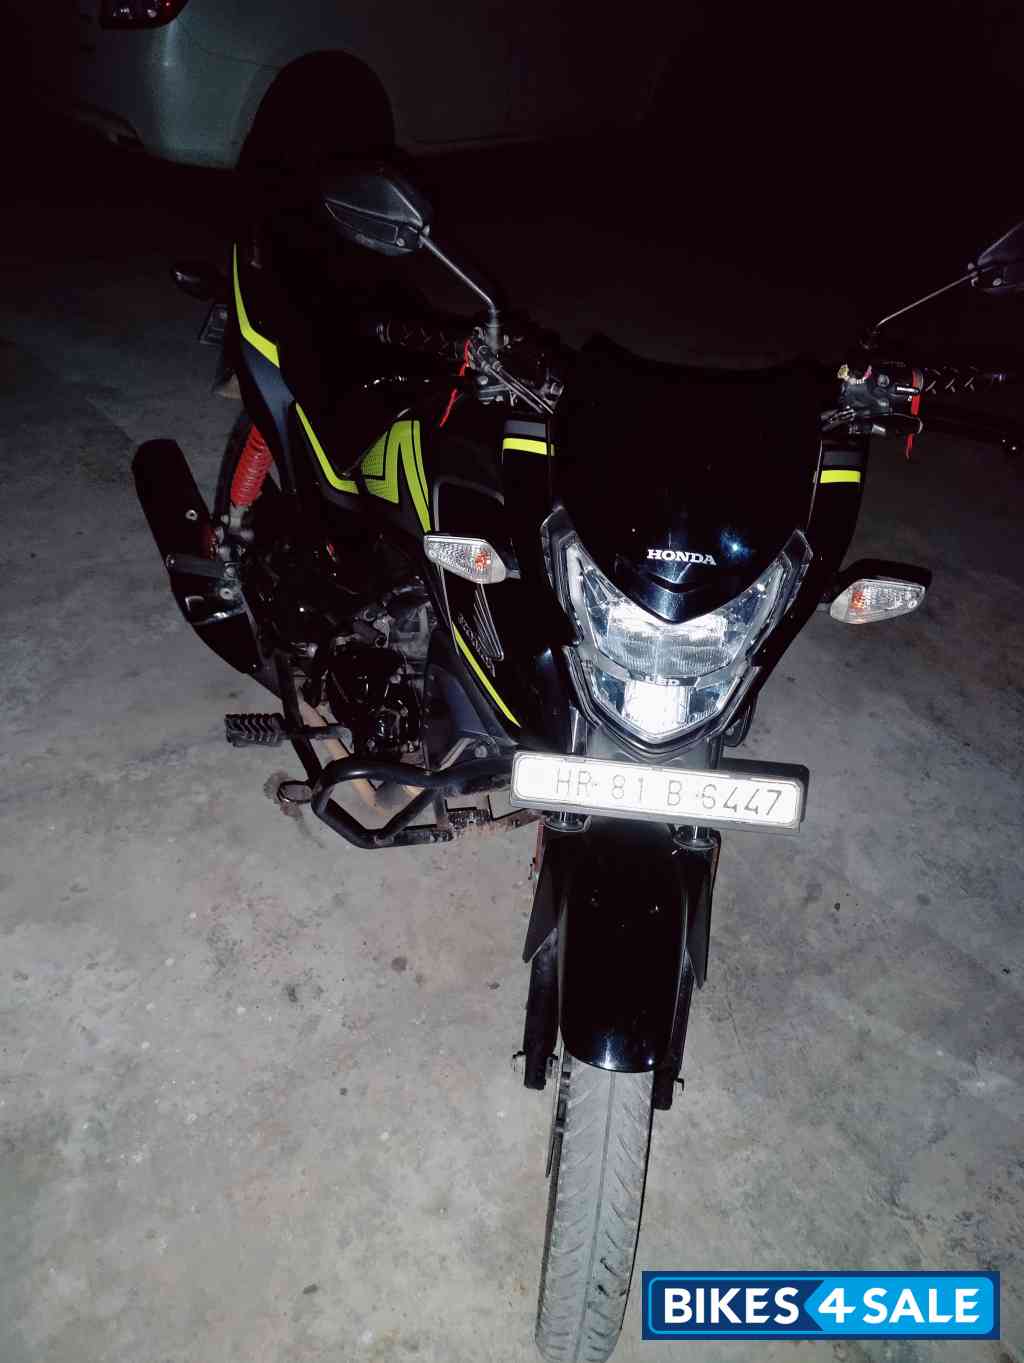 Black Honda SP 125 BSVI